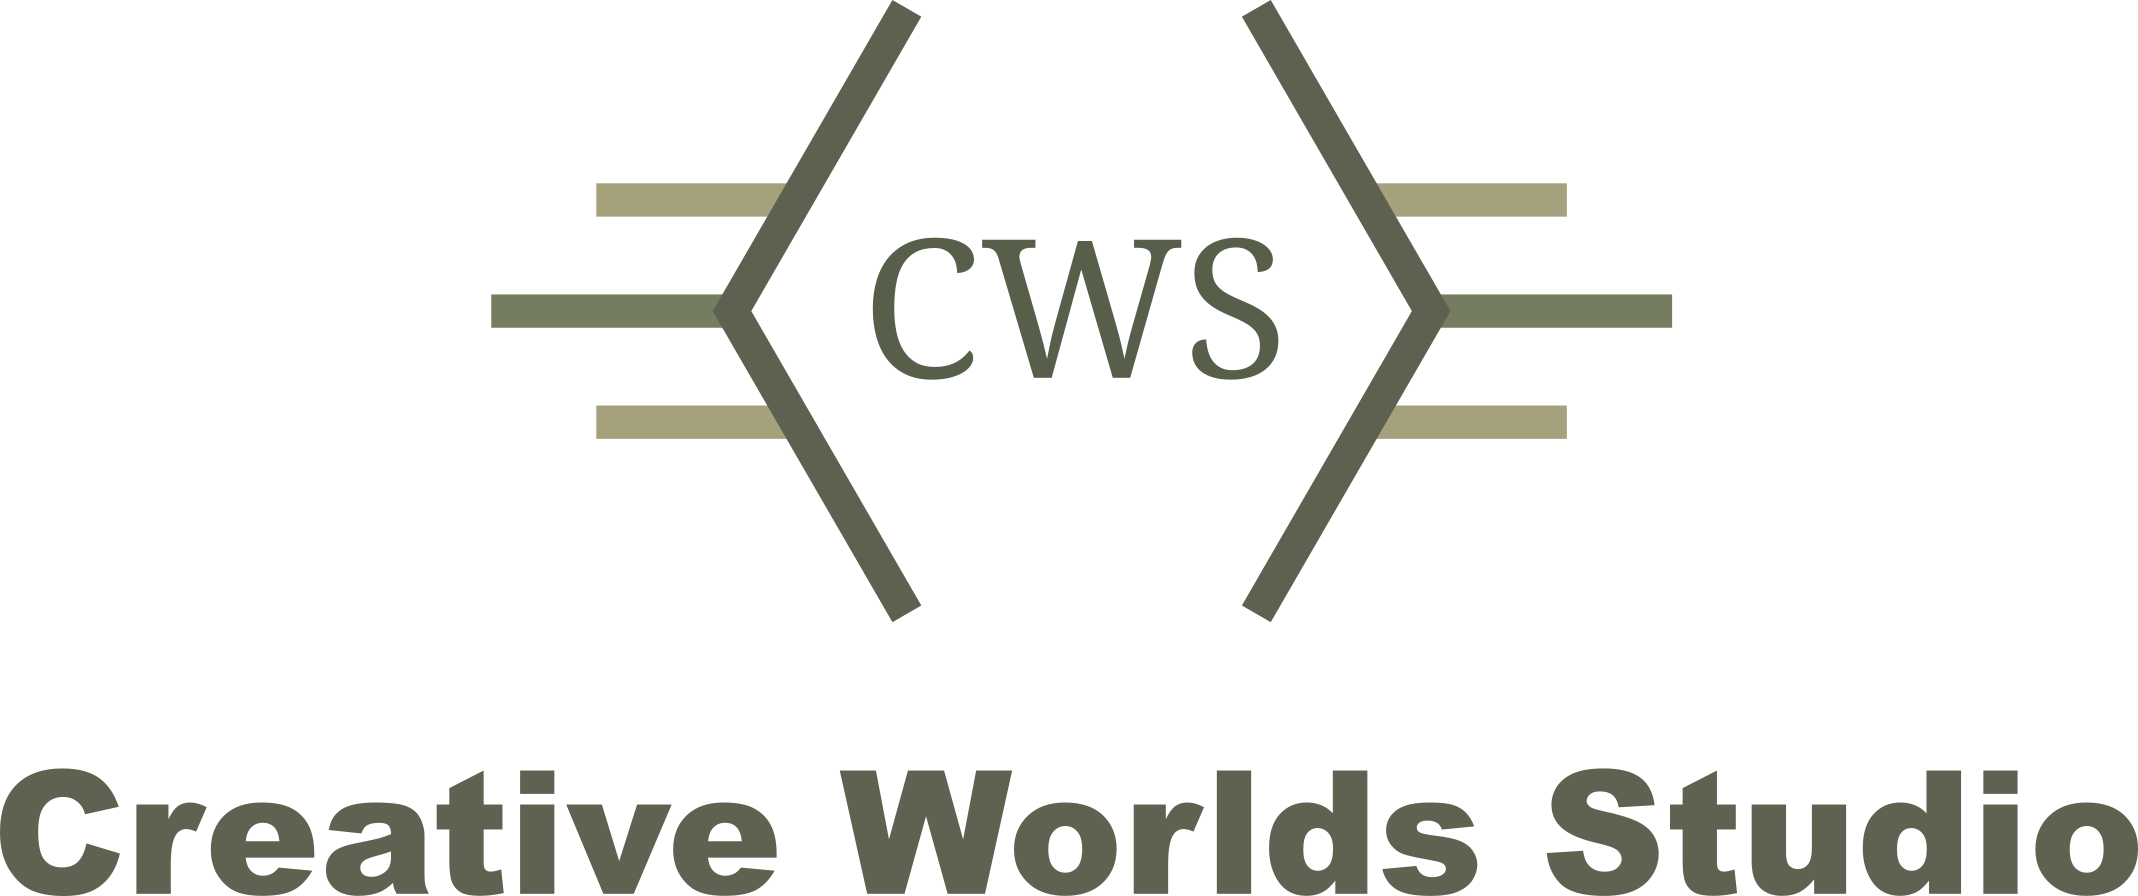 Logo de l'équipe : Creative Worlds Studio.